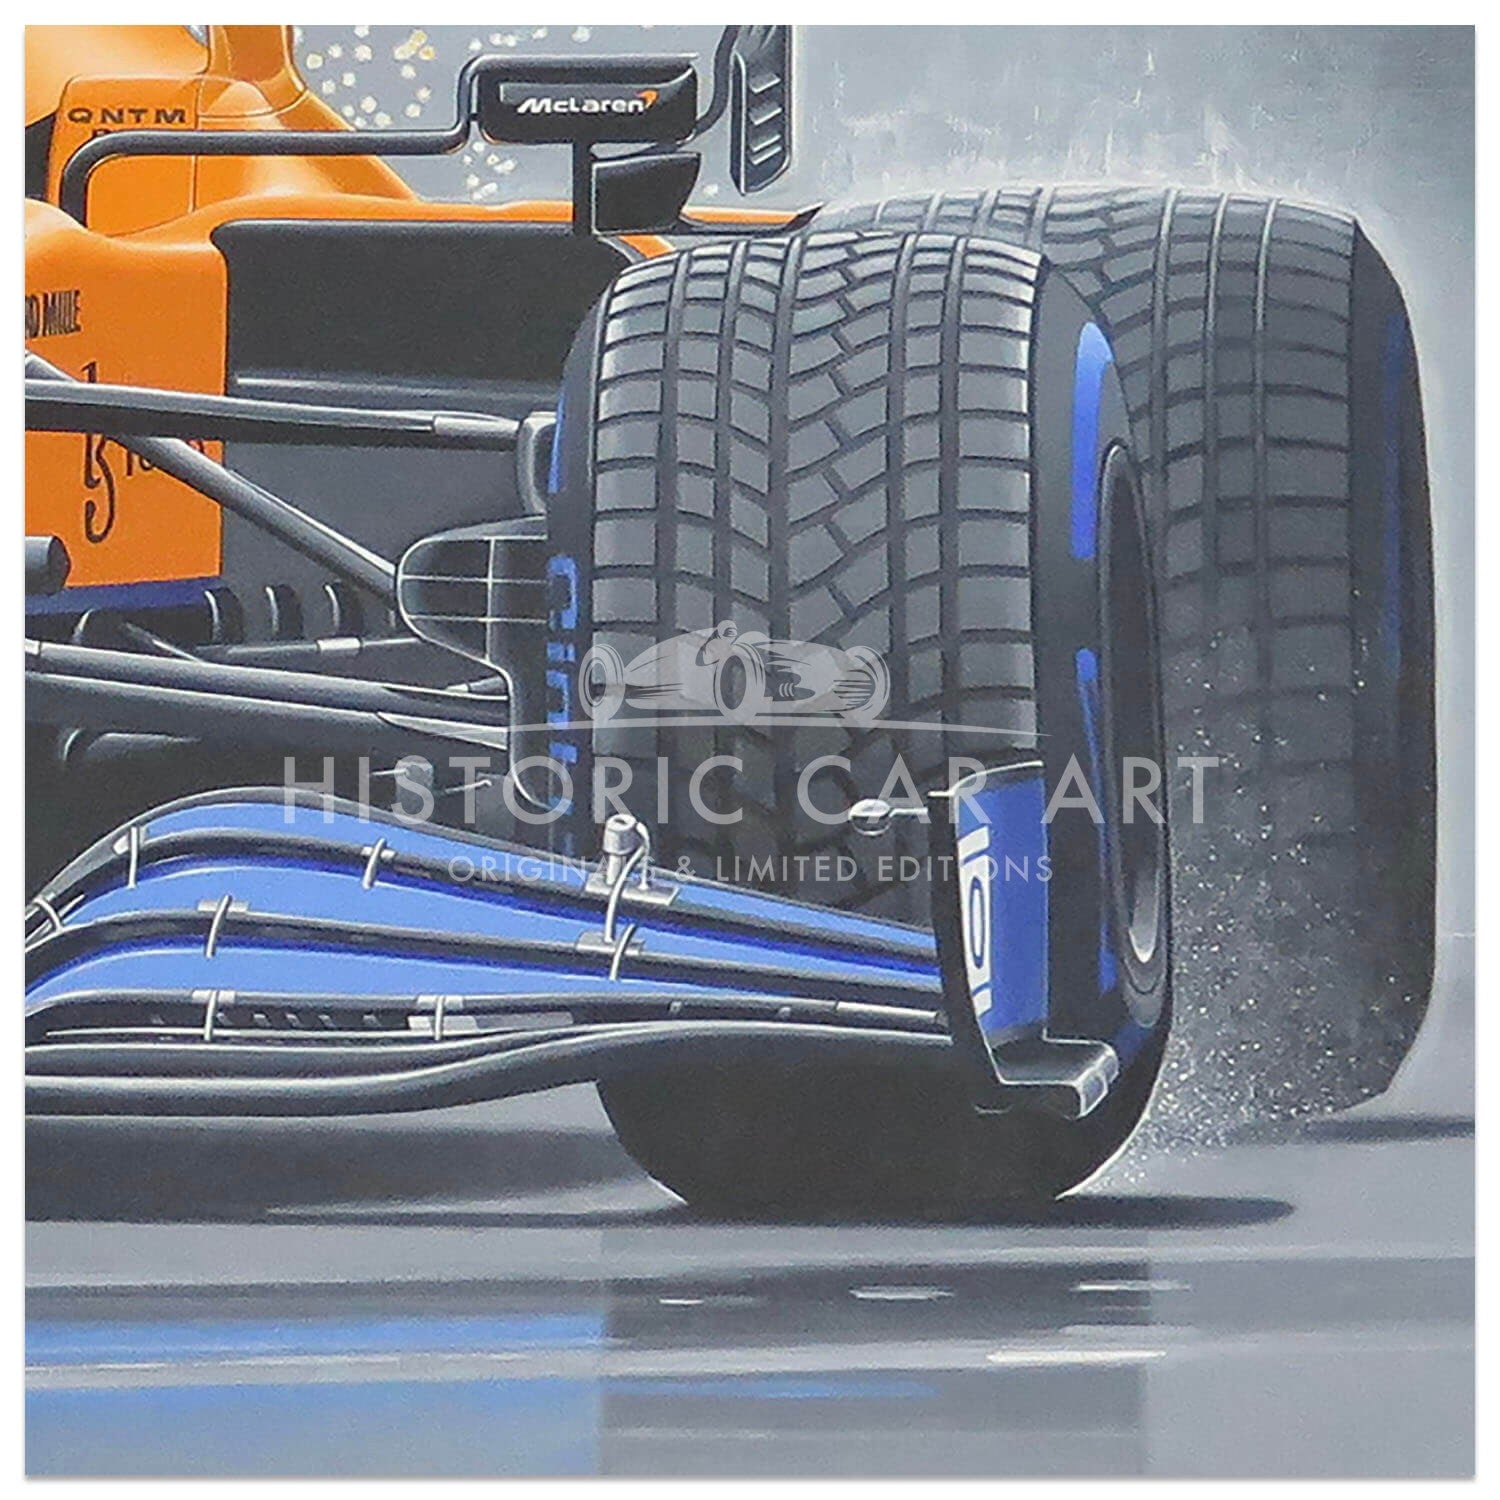 Earth, Wind and Fire | Lando Norris | McLaren | Formula 1 Artwork